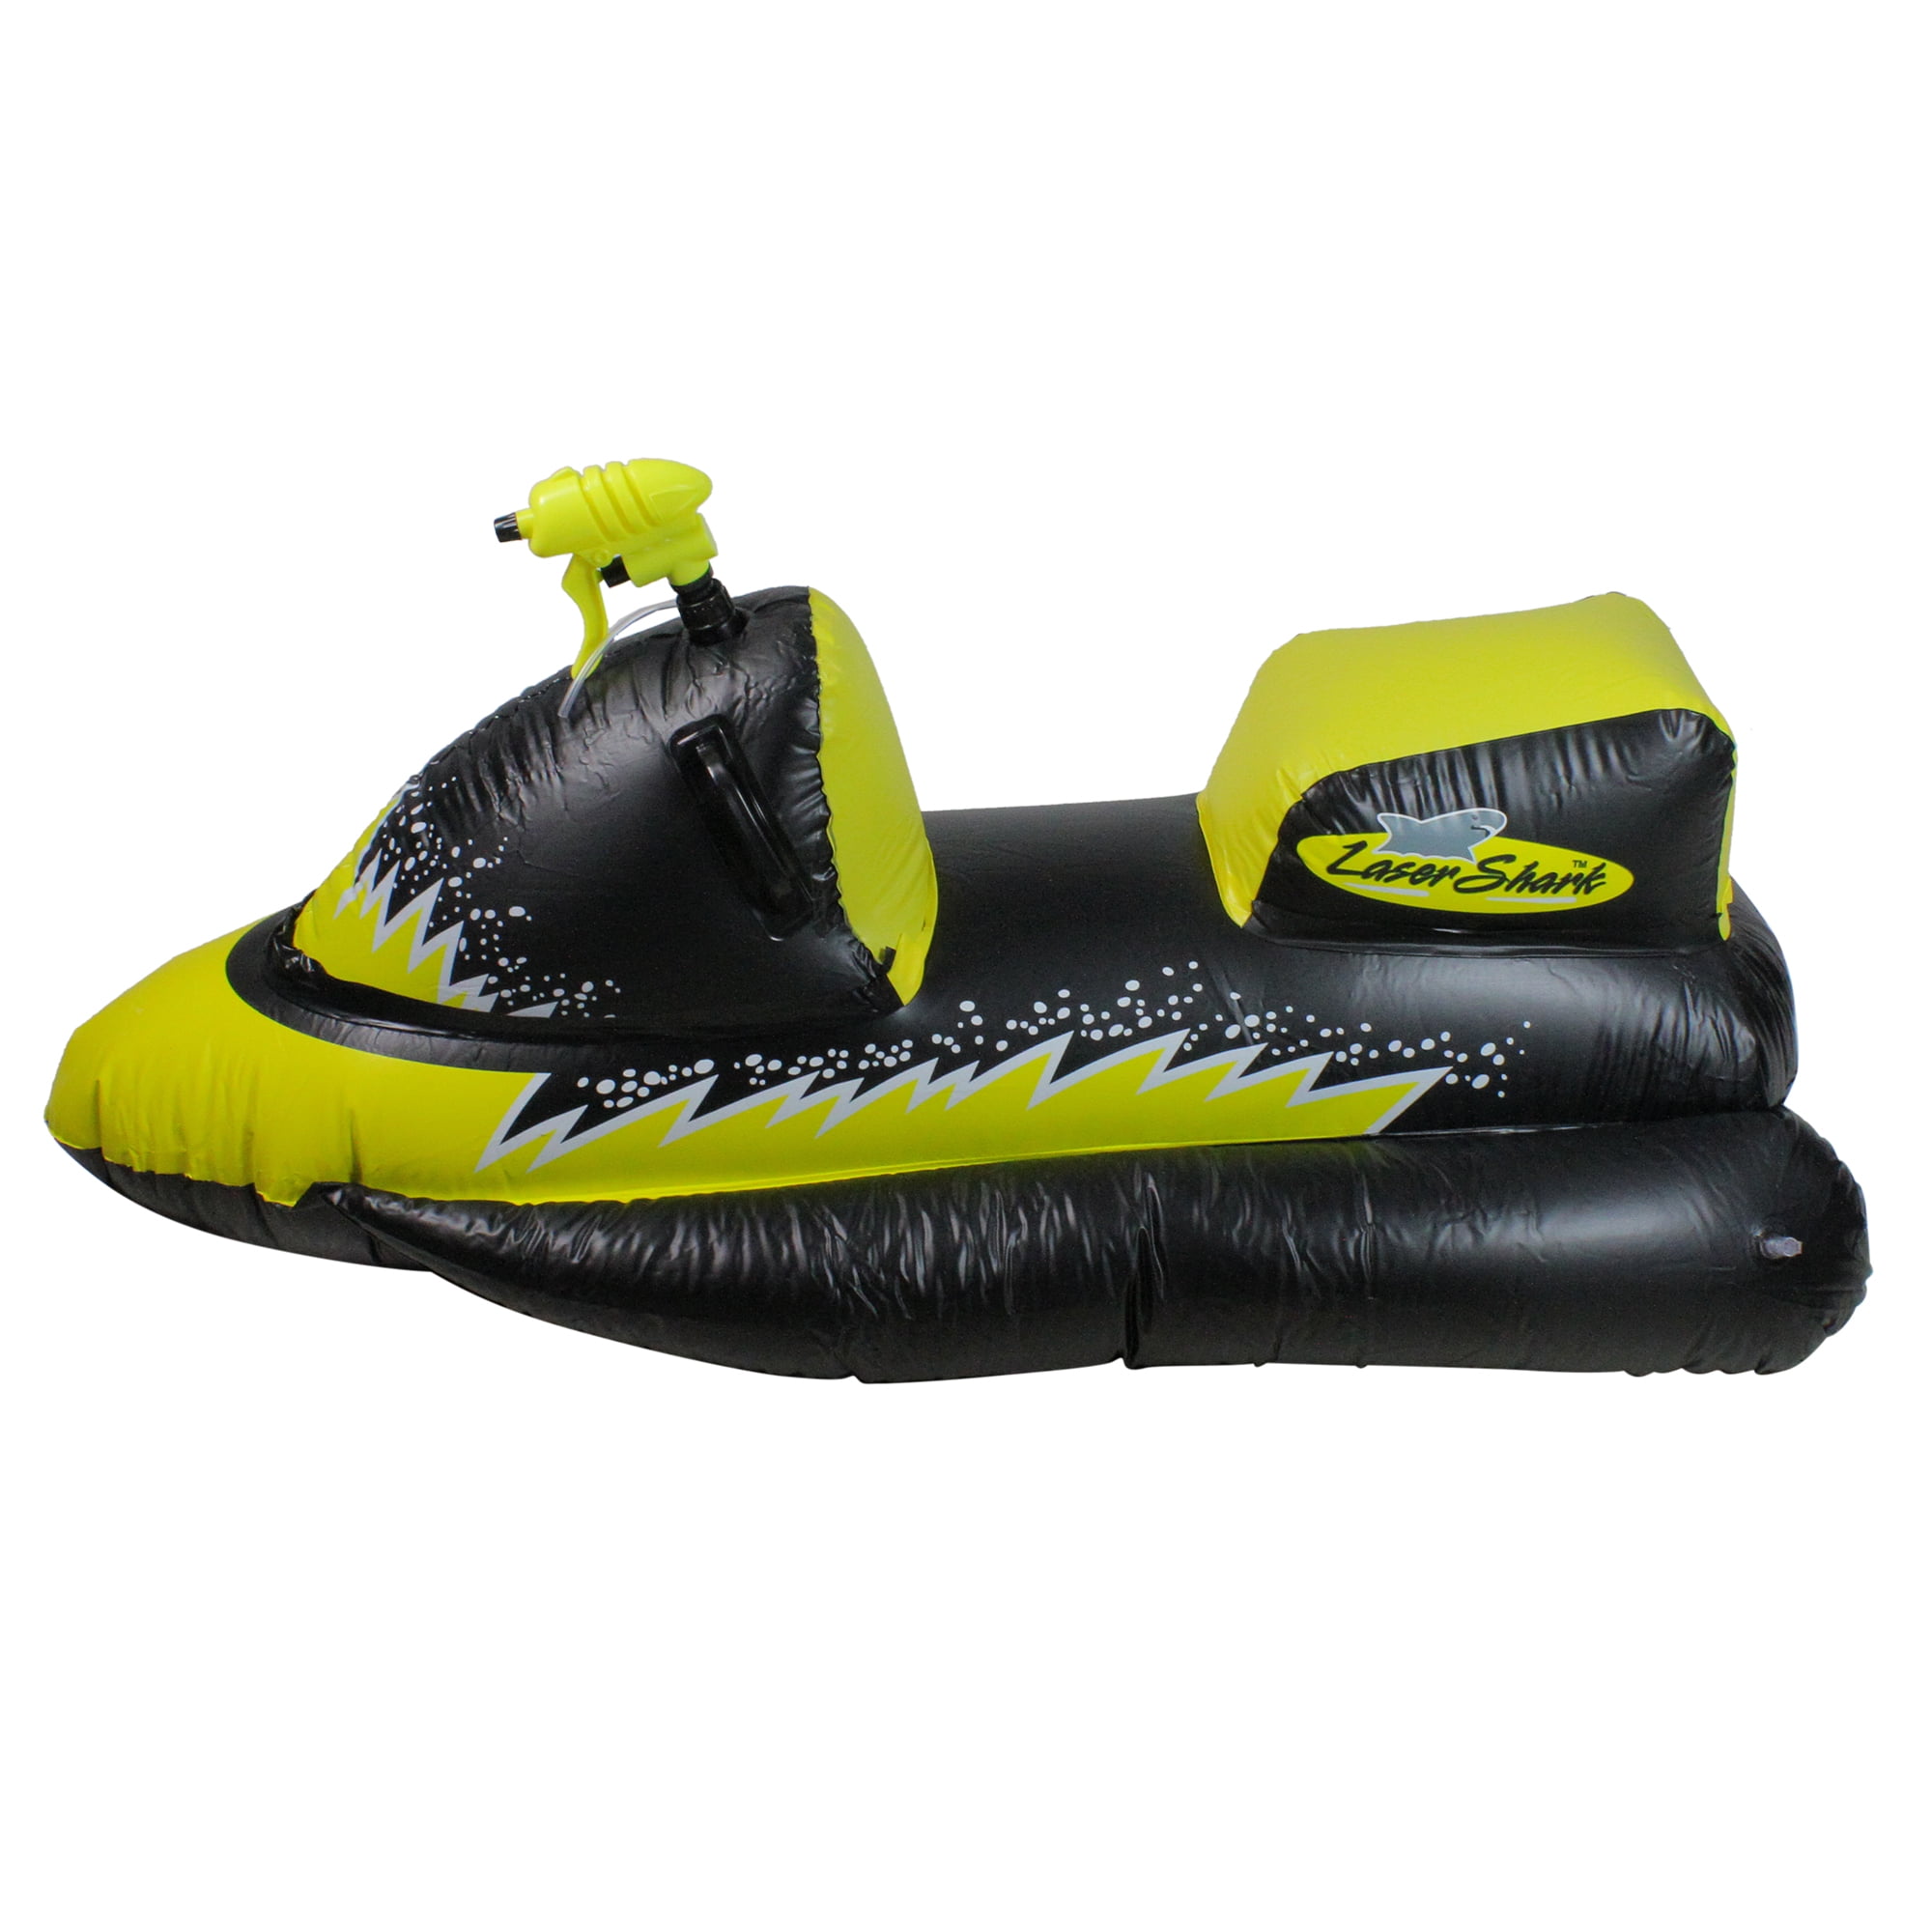 Swimline GTX Wet Ski Inflatable Ride-on 1 White for sale online 